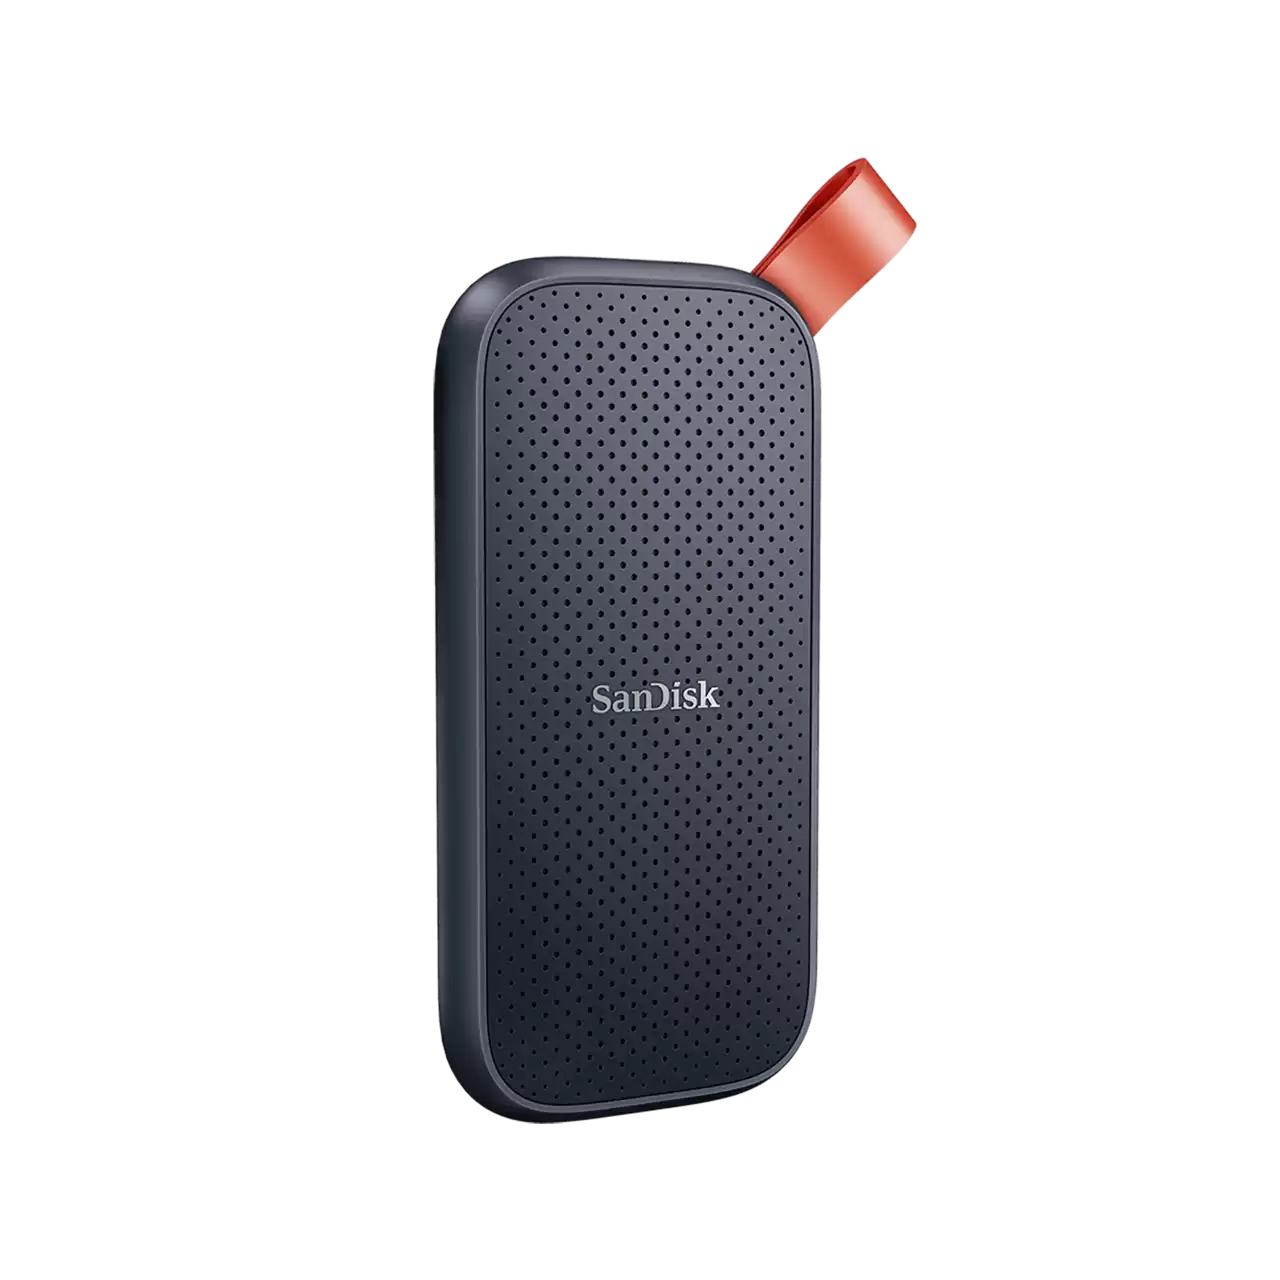 SanDisk® Portable SSD | Western Digital 1 TB 便携硬盘